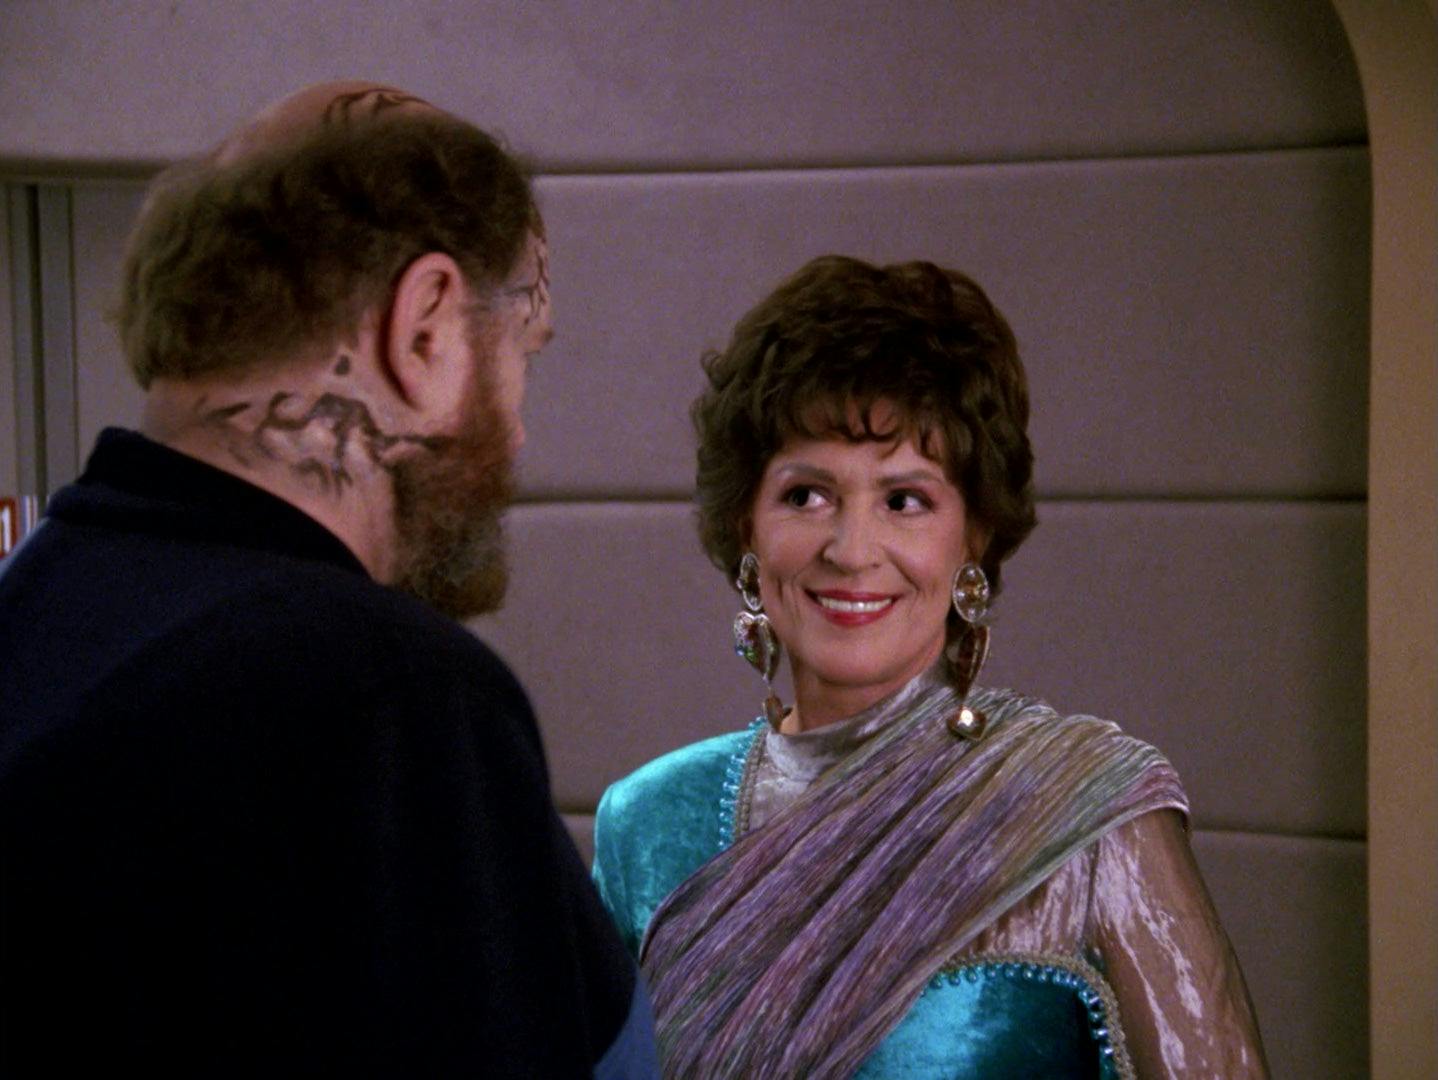 Lwaxana Troi stares lovingly at Timcin in Star Trek: The Next Generation - Half A Life